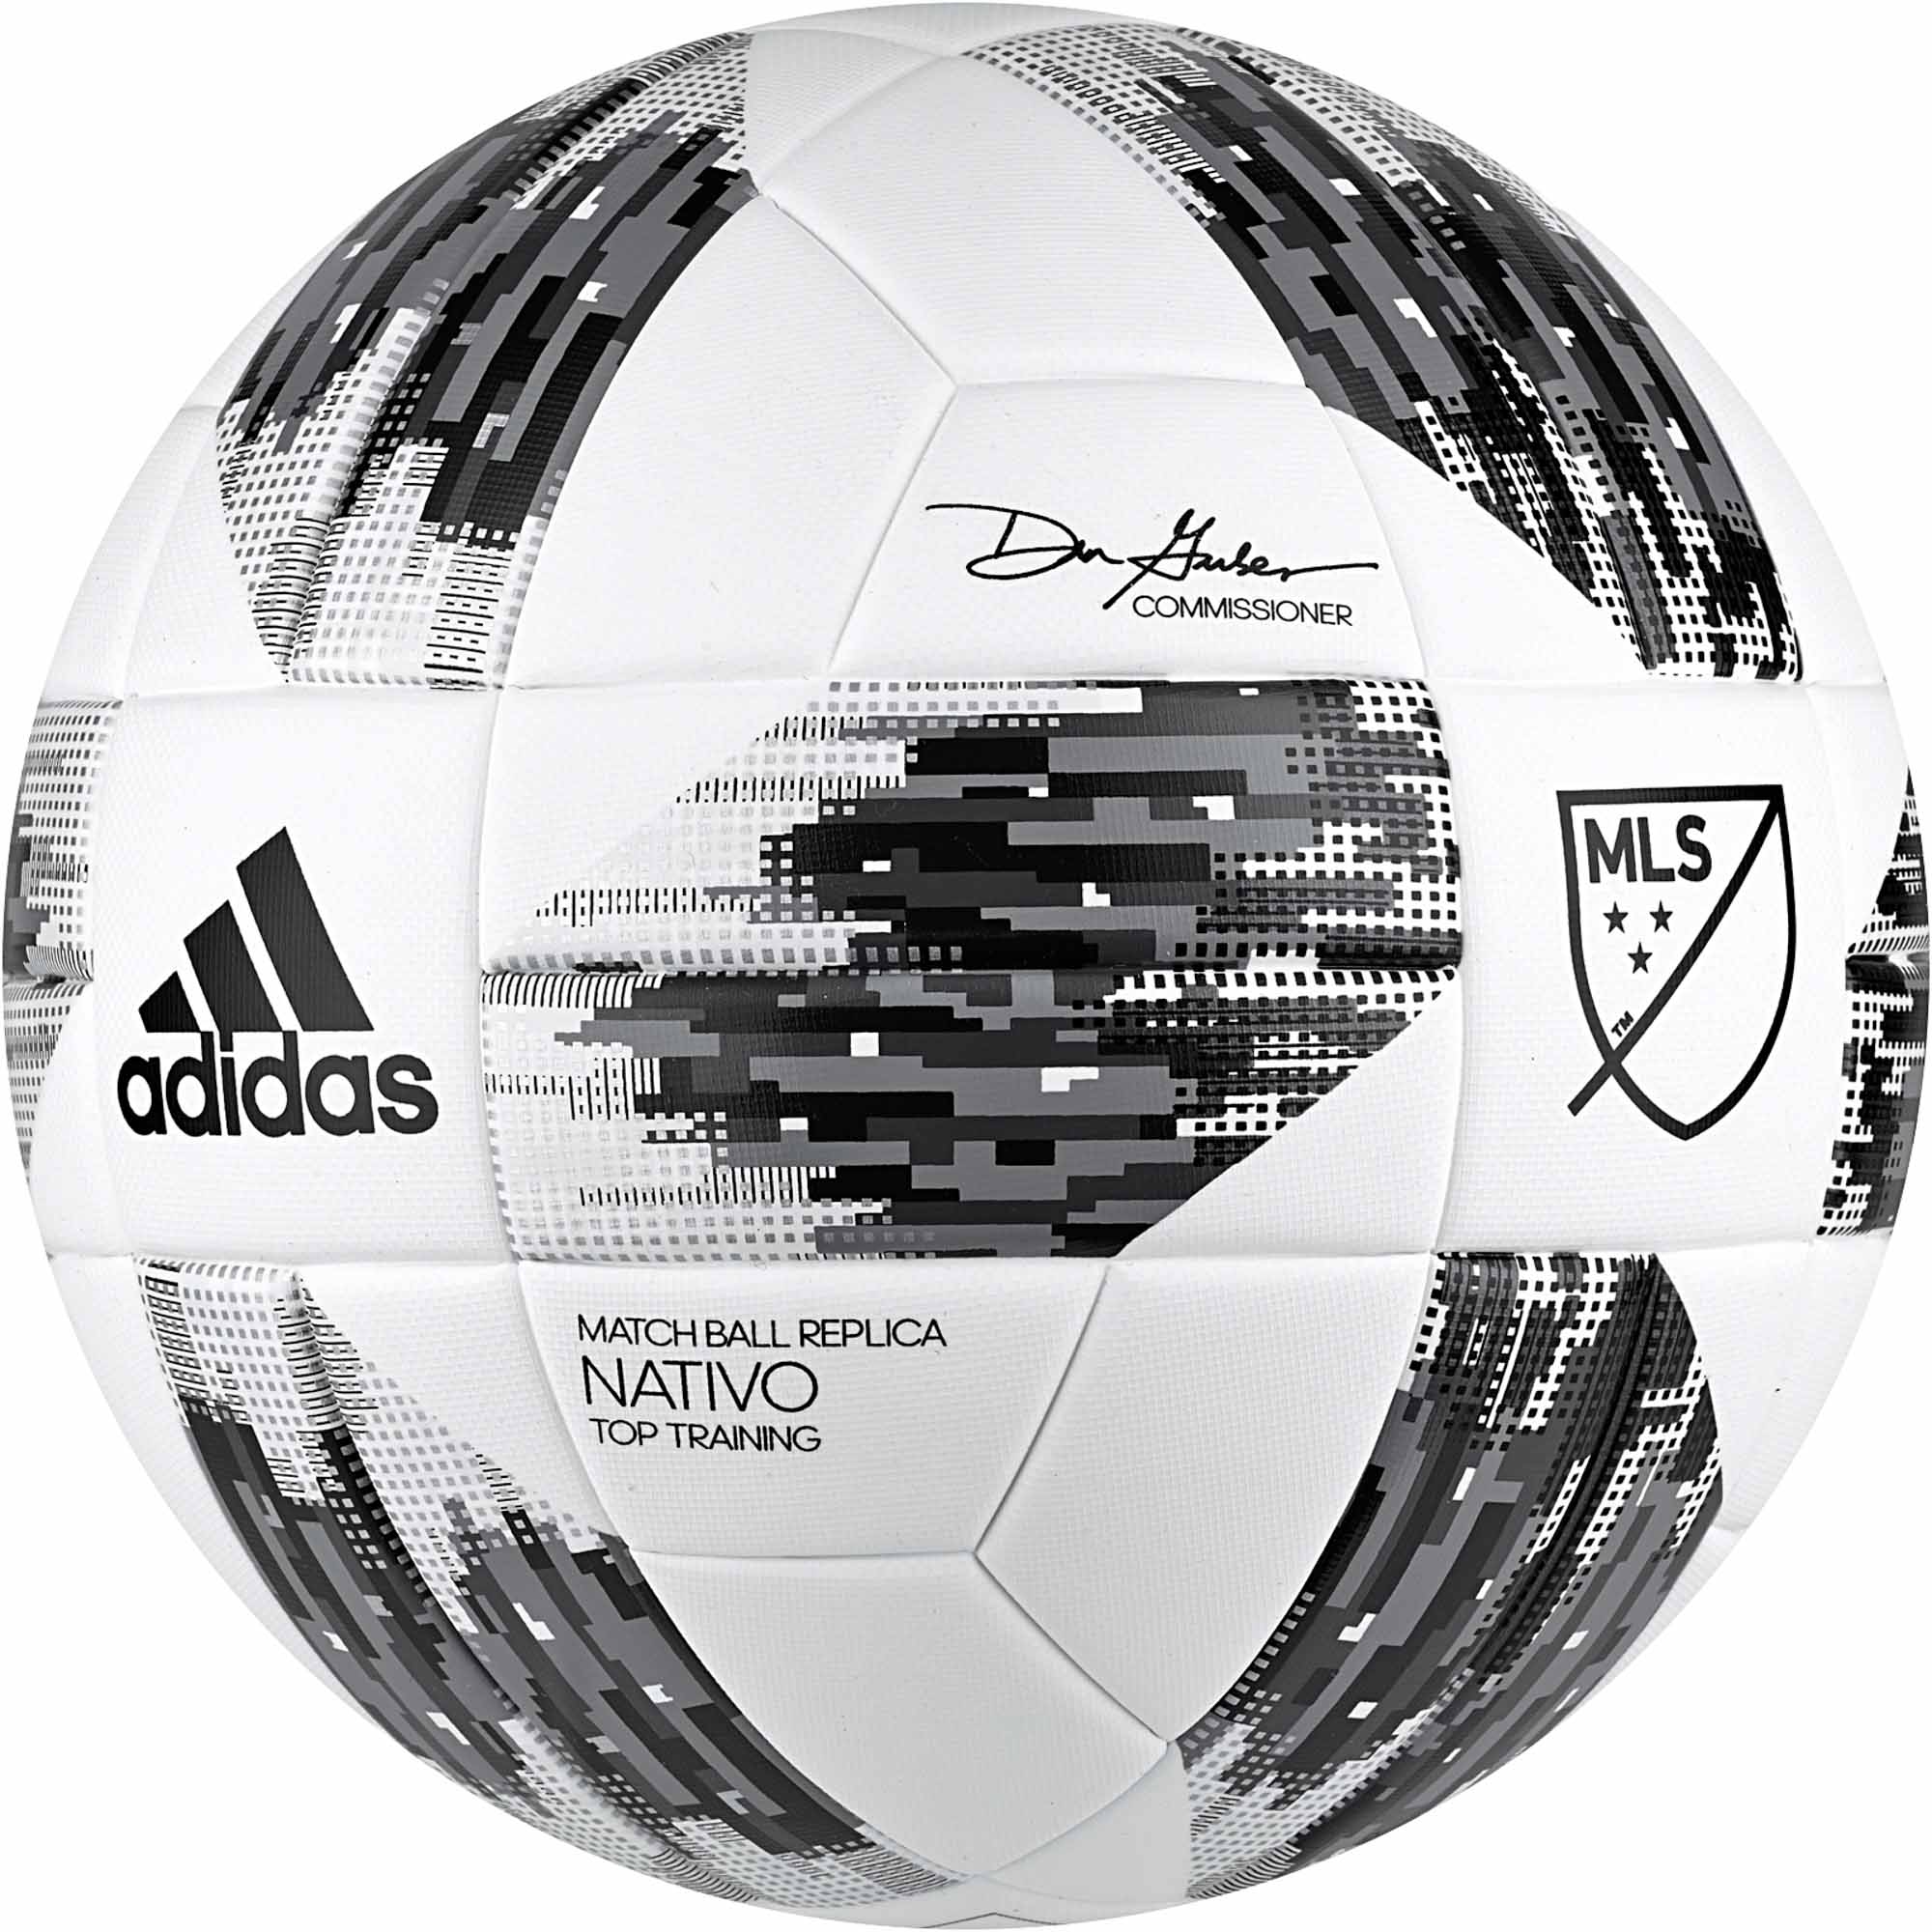 adidas top training soccer ball